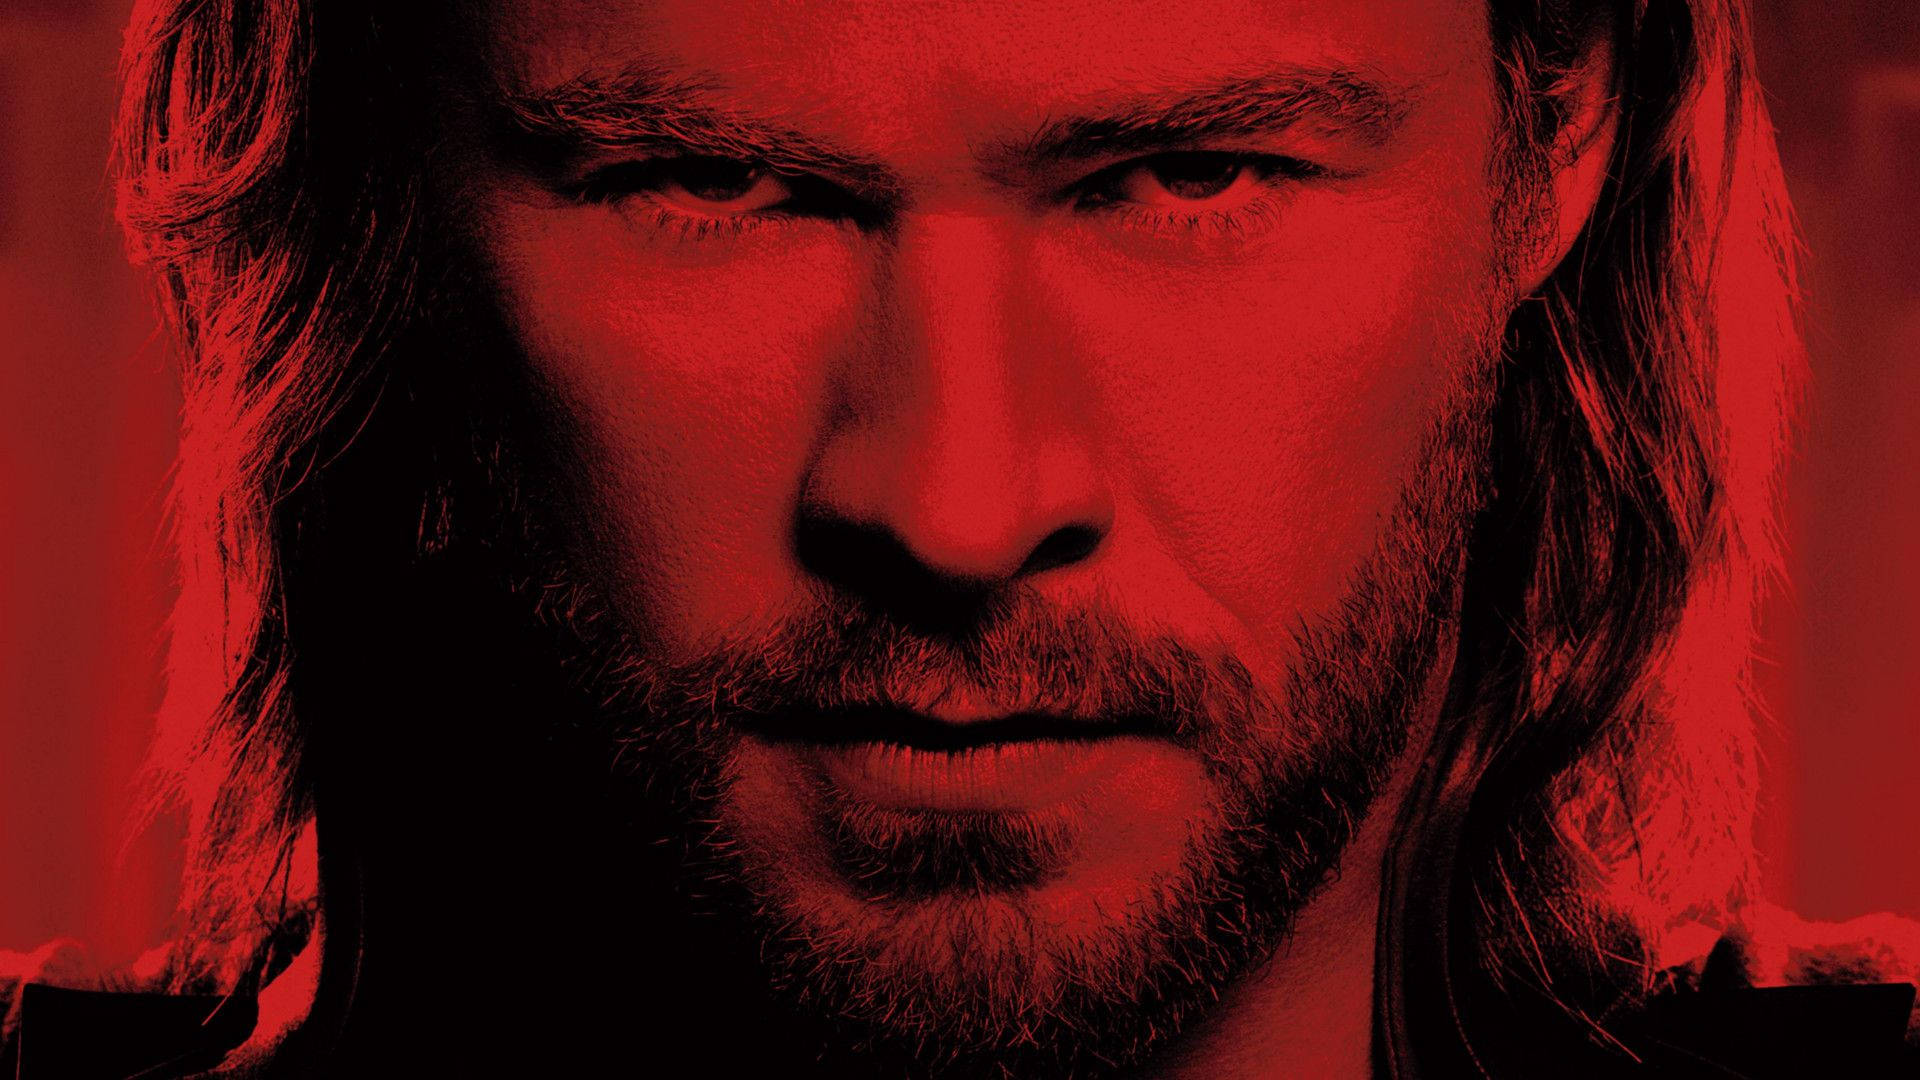 Chris Hemsworth In Red